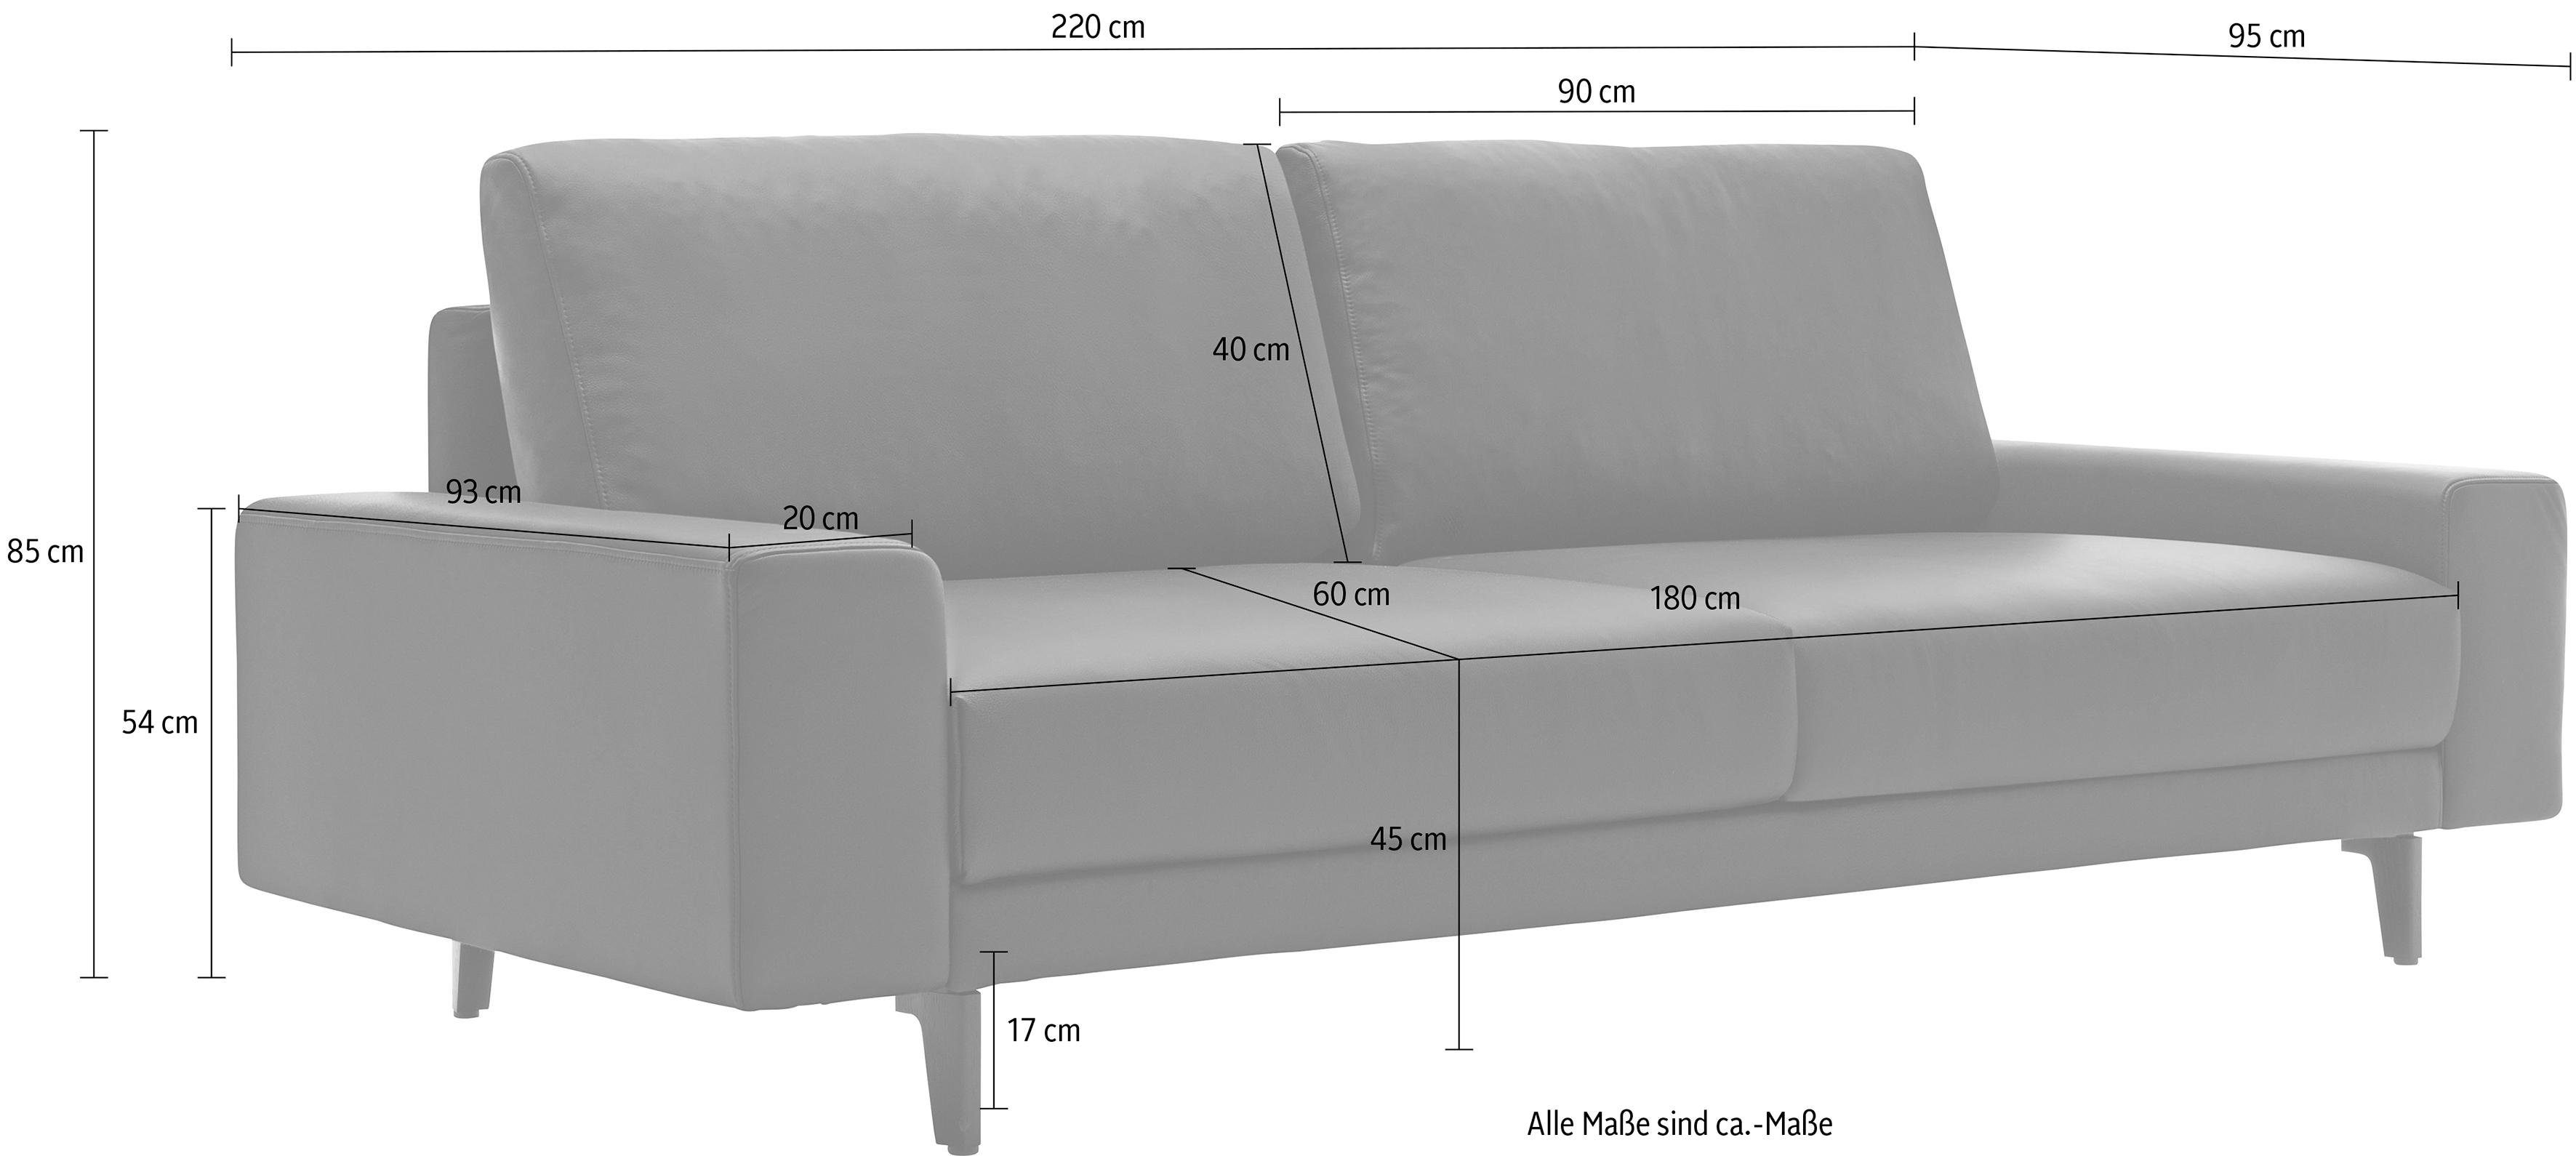 Breite Armlehne in breit 220 3-Sitzer hs.450, cm niedrig, umbragrau, sofa Alugussfüße hülsta